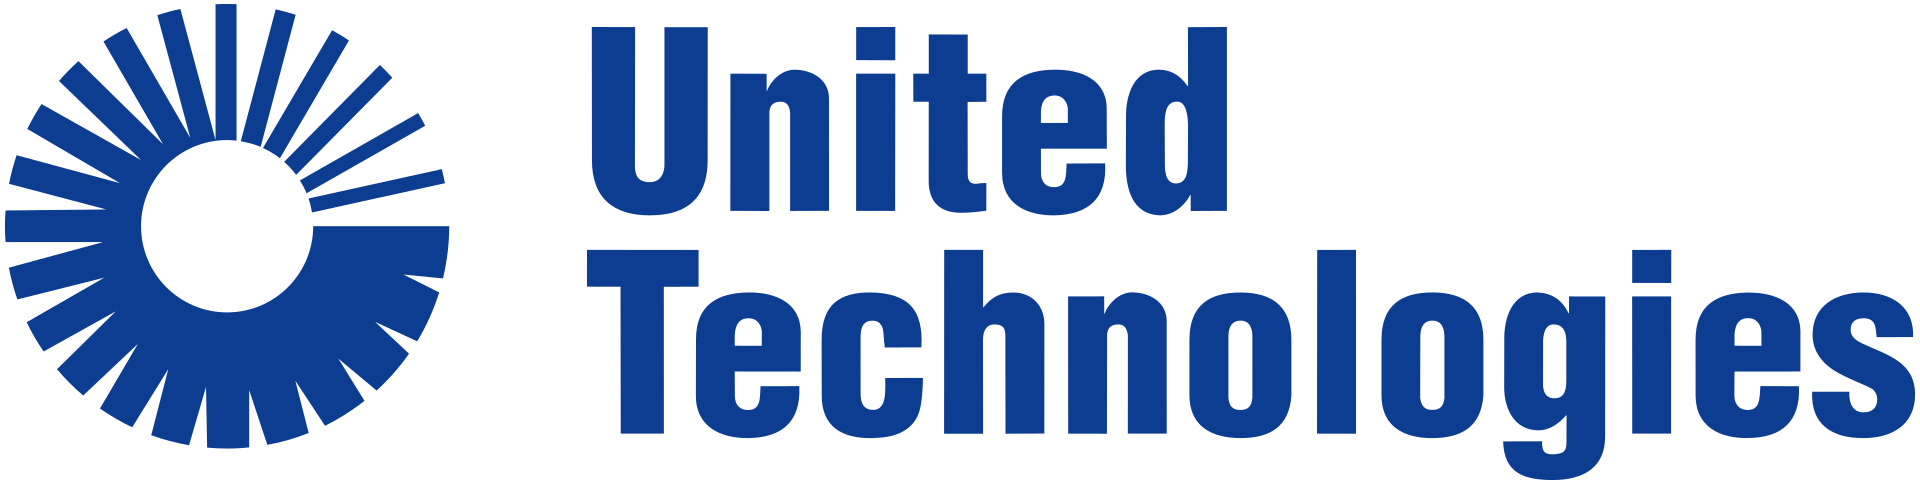 United Technologies - Hamilton Sundstrand